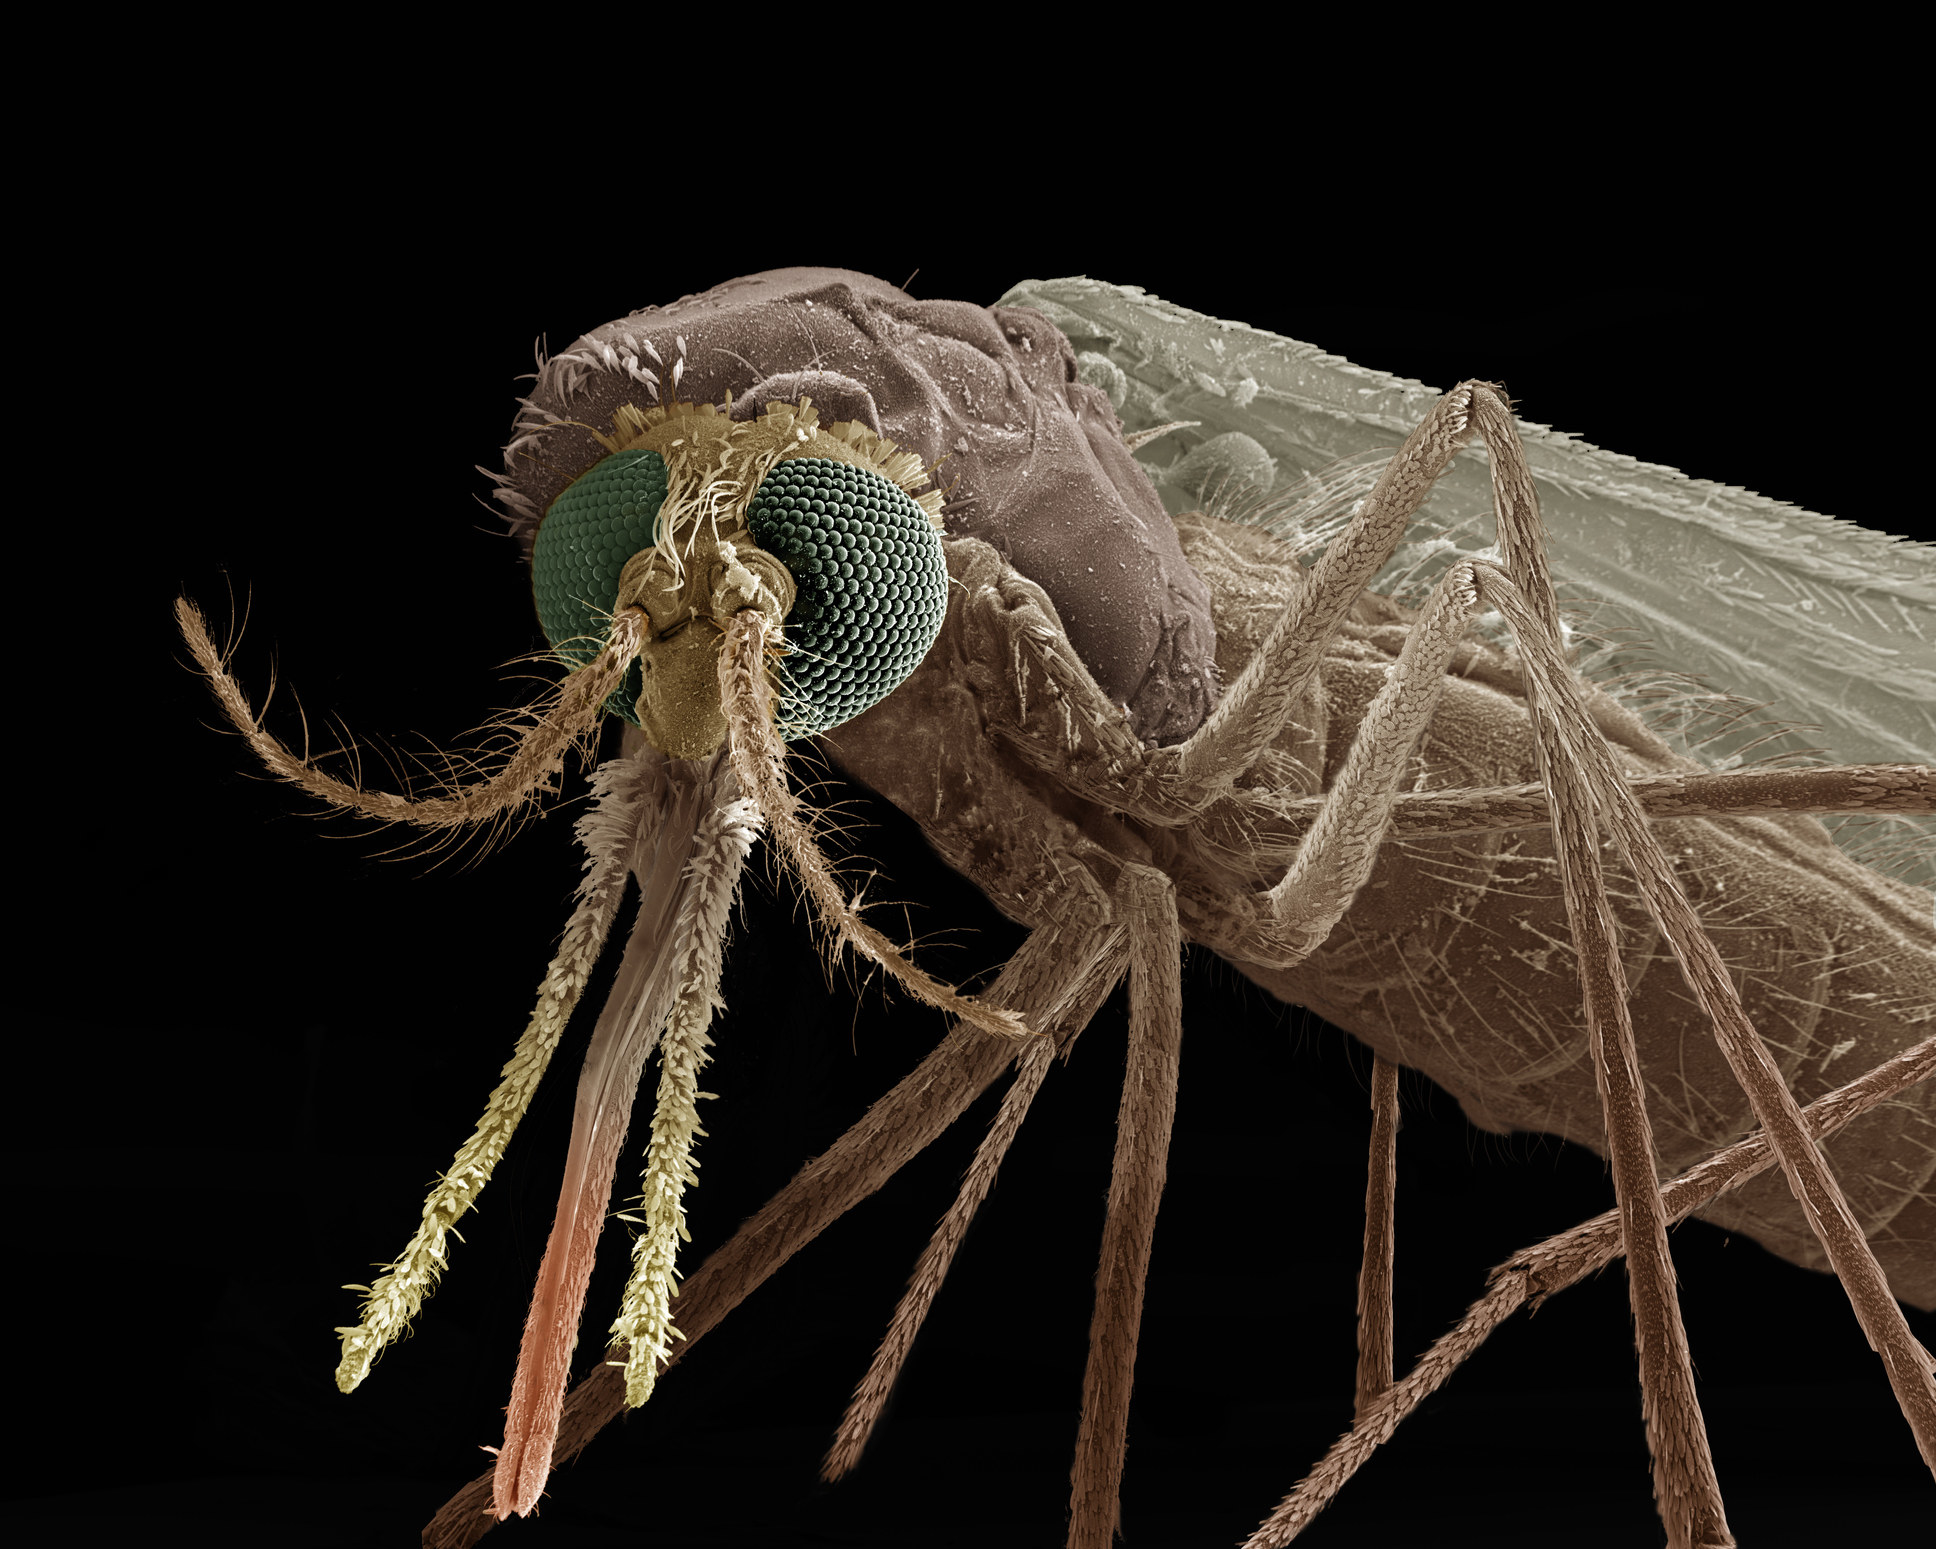 closeup of a mosquito